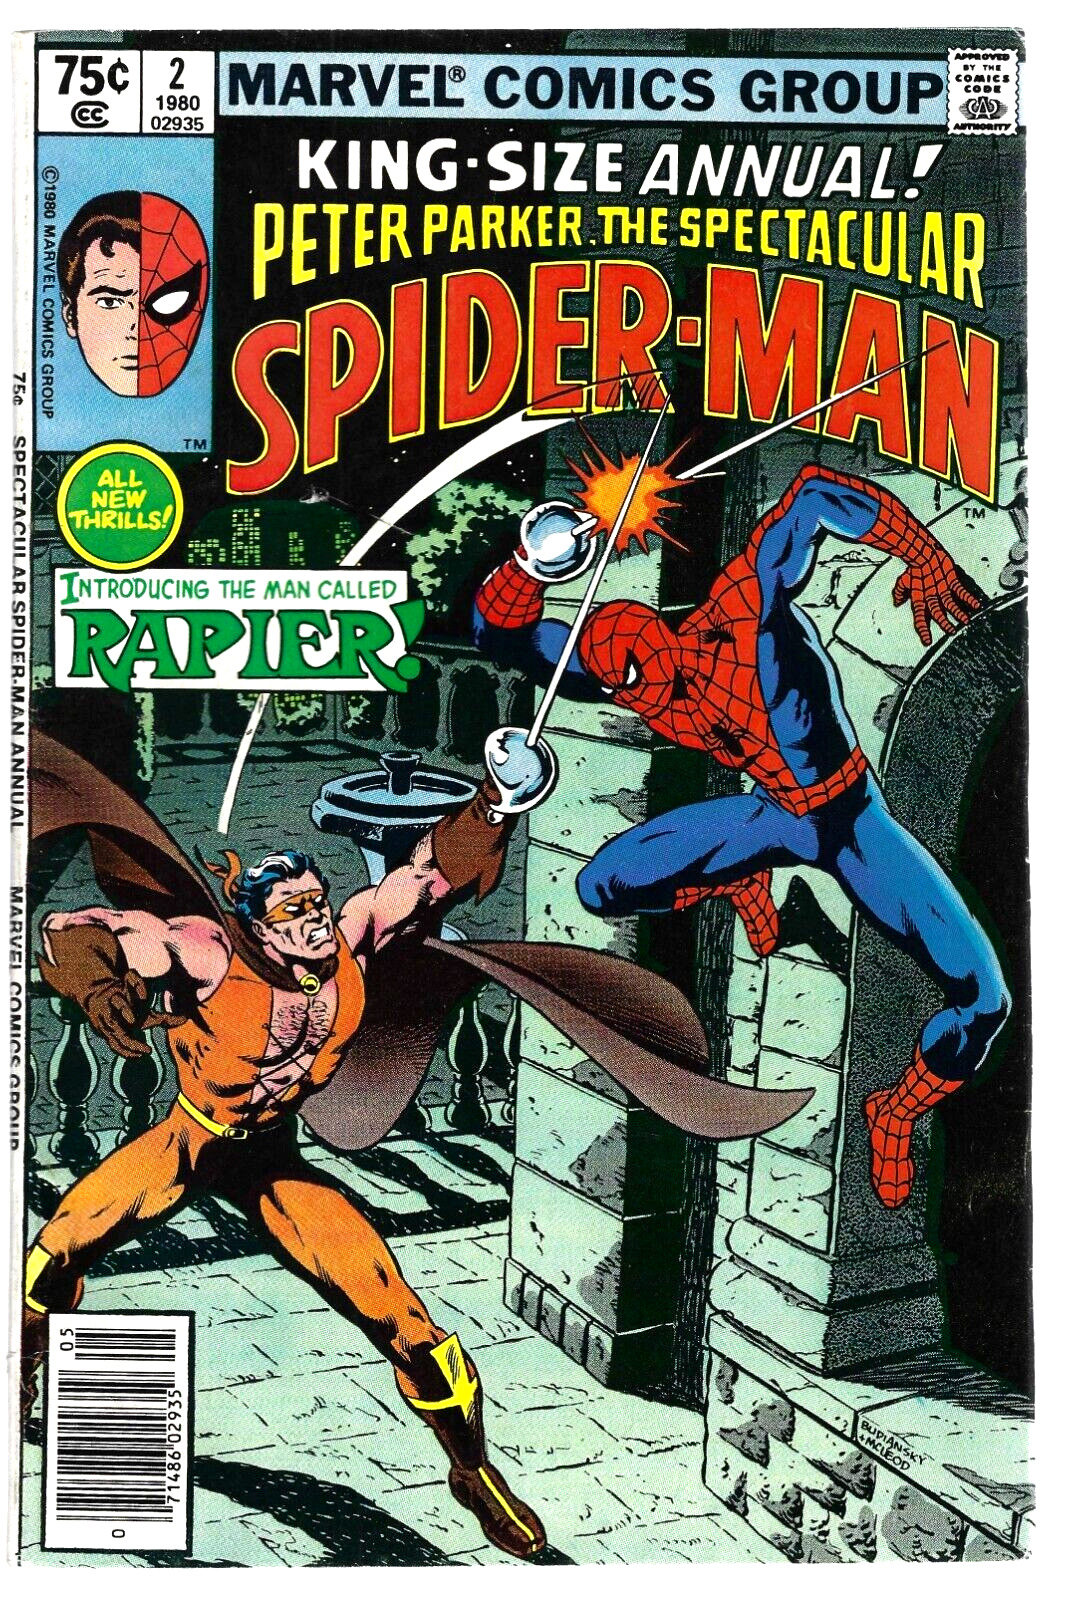 SPECTACULAR SPIDERMAN KING SIZE ANNUAL #2 1980 MARVEL COMICS RAPIER